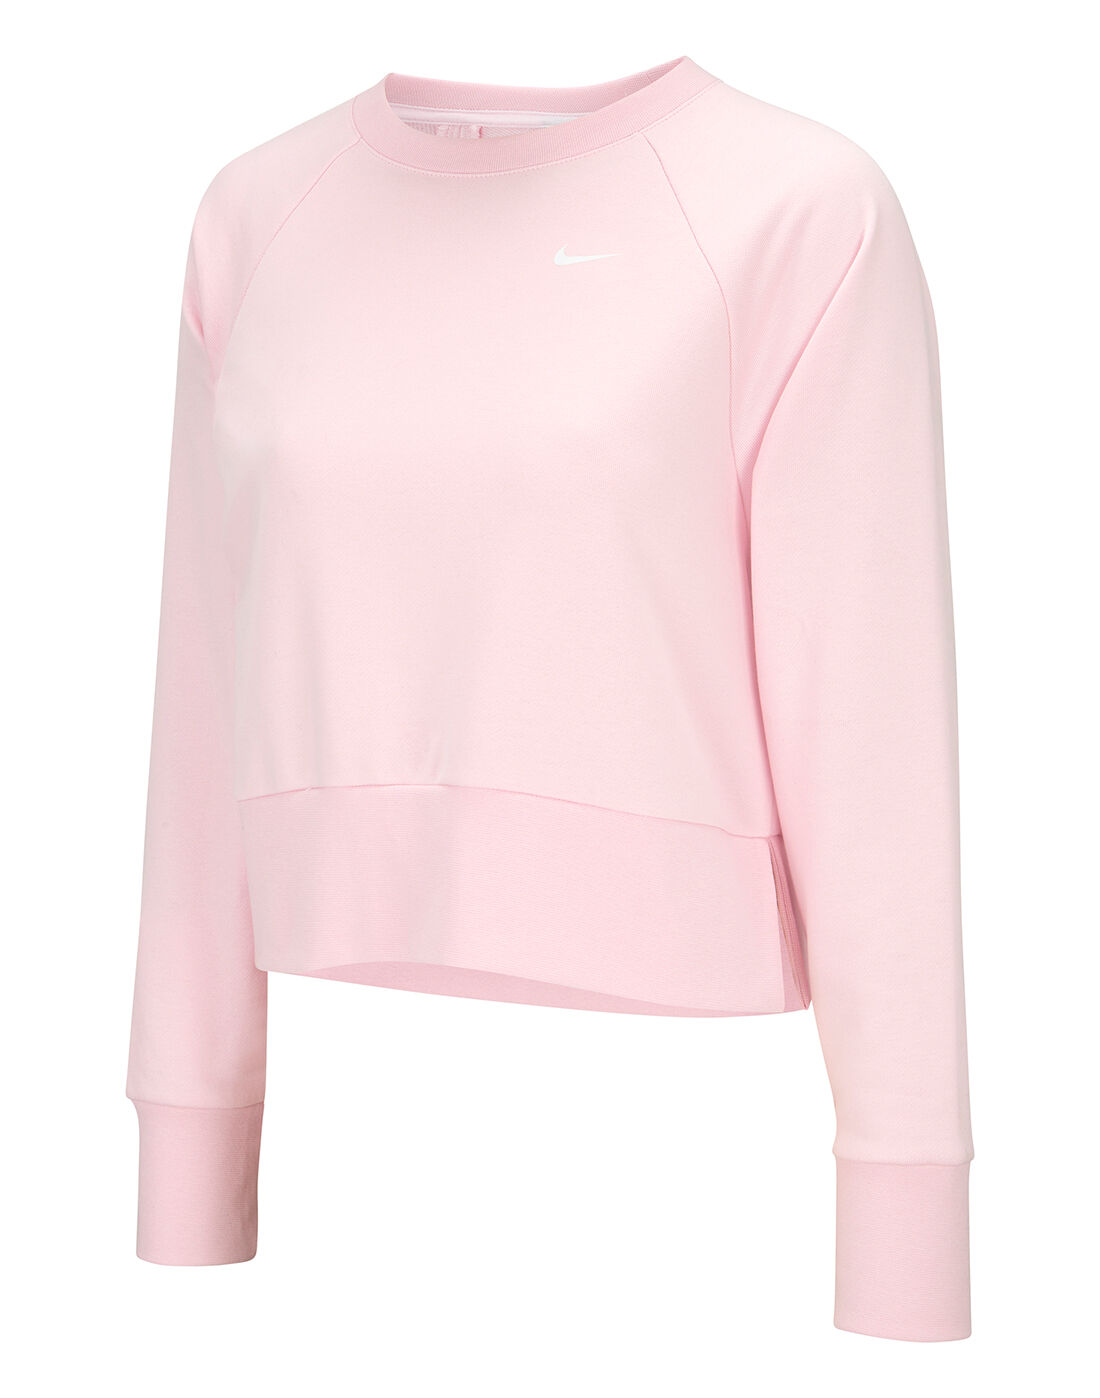 Women's Pink Nike Gym Sweatshirt | Life 